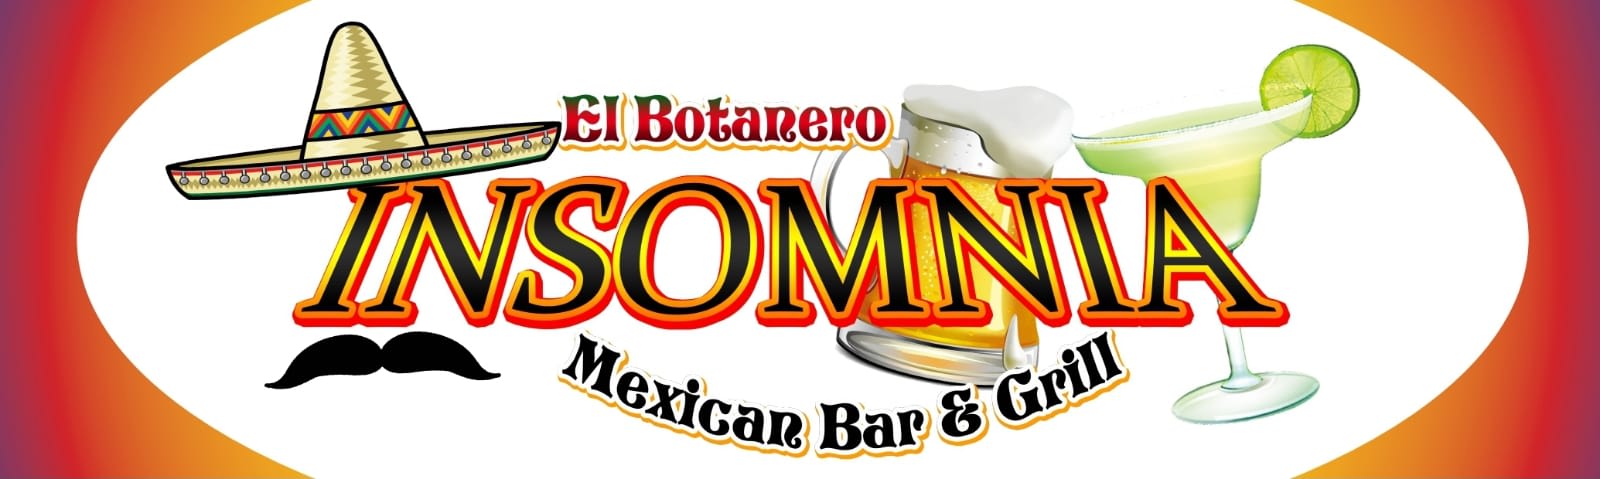 El Botanero Insomnia Mexican Bar & Grill